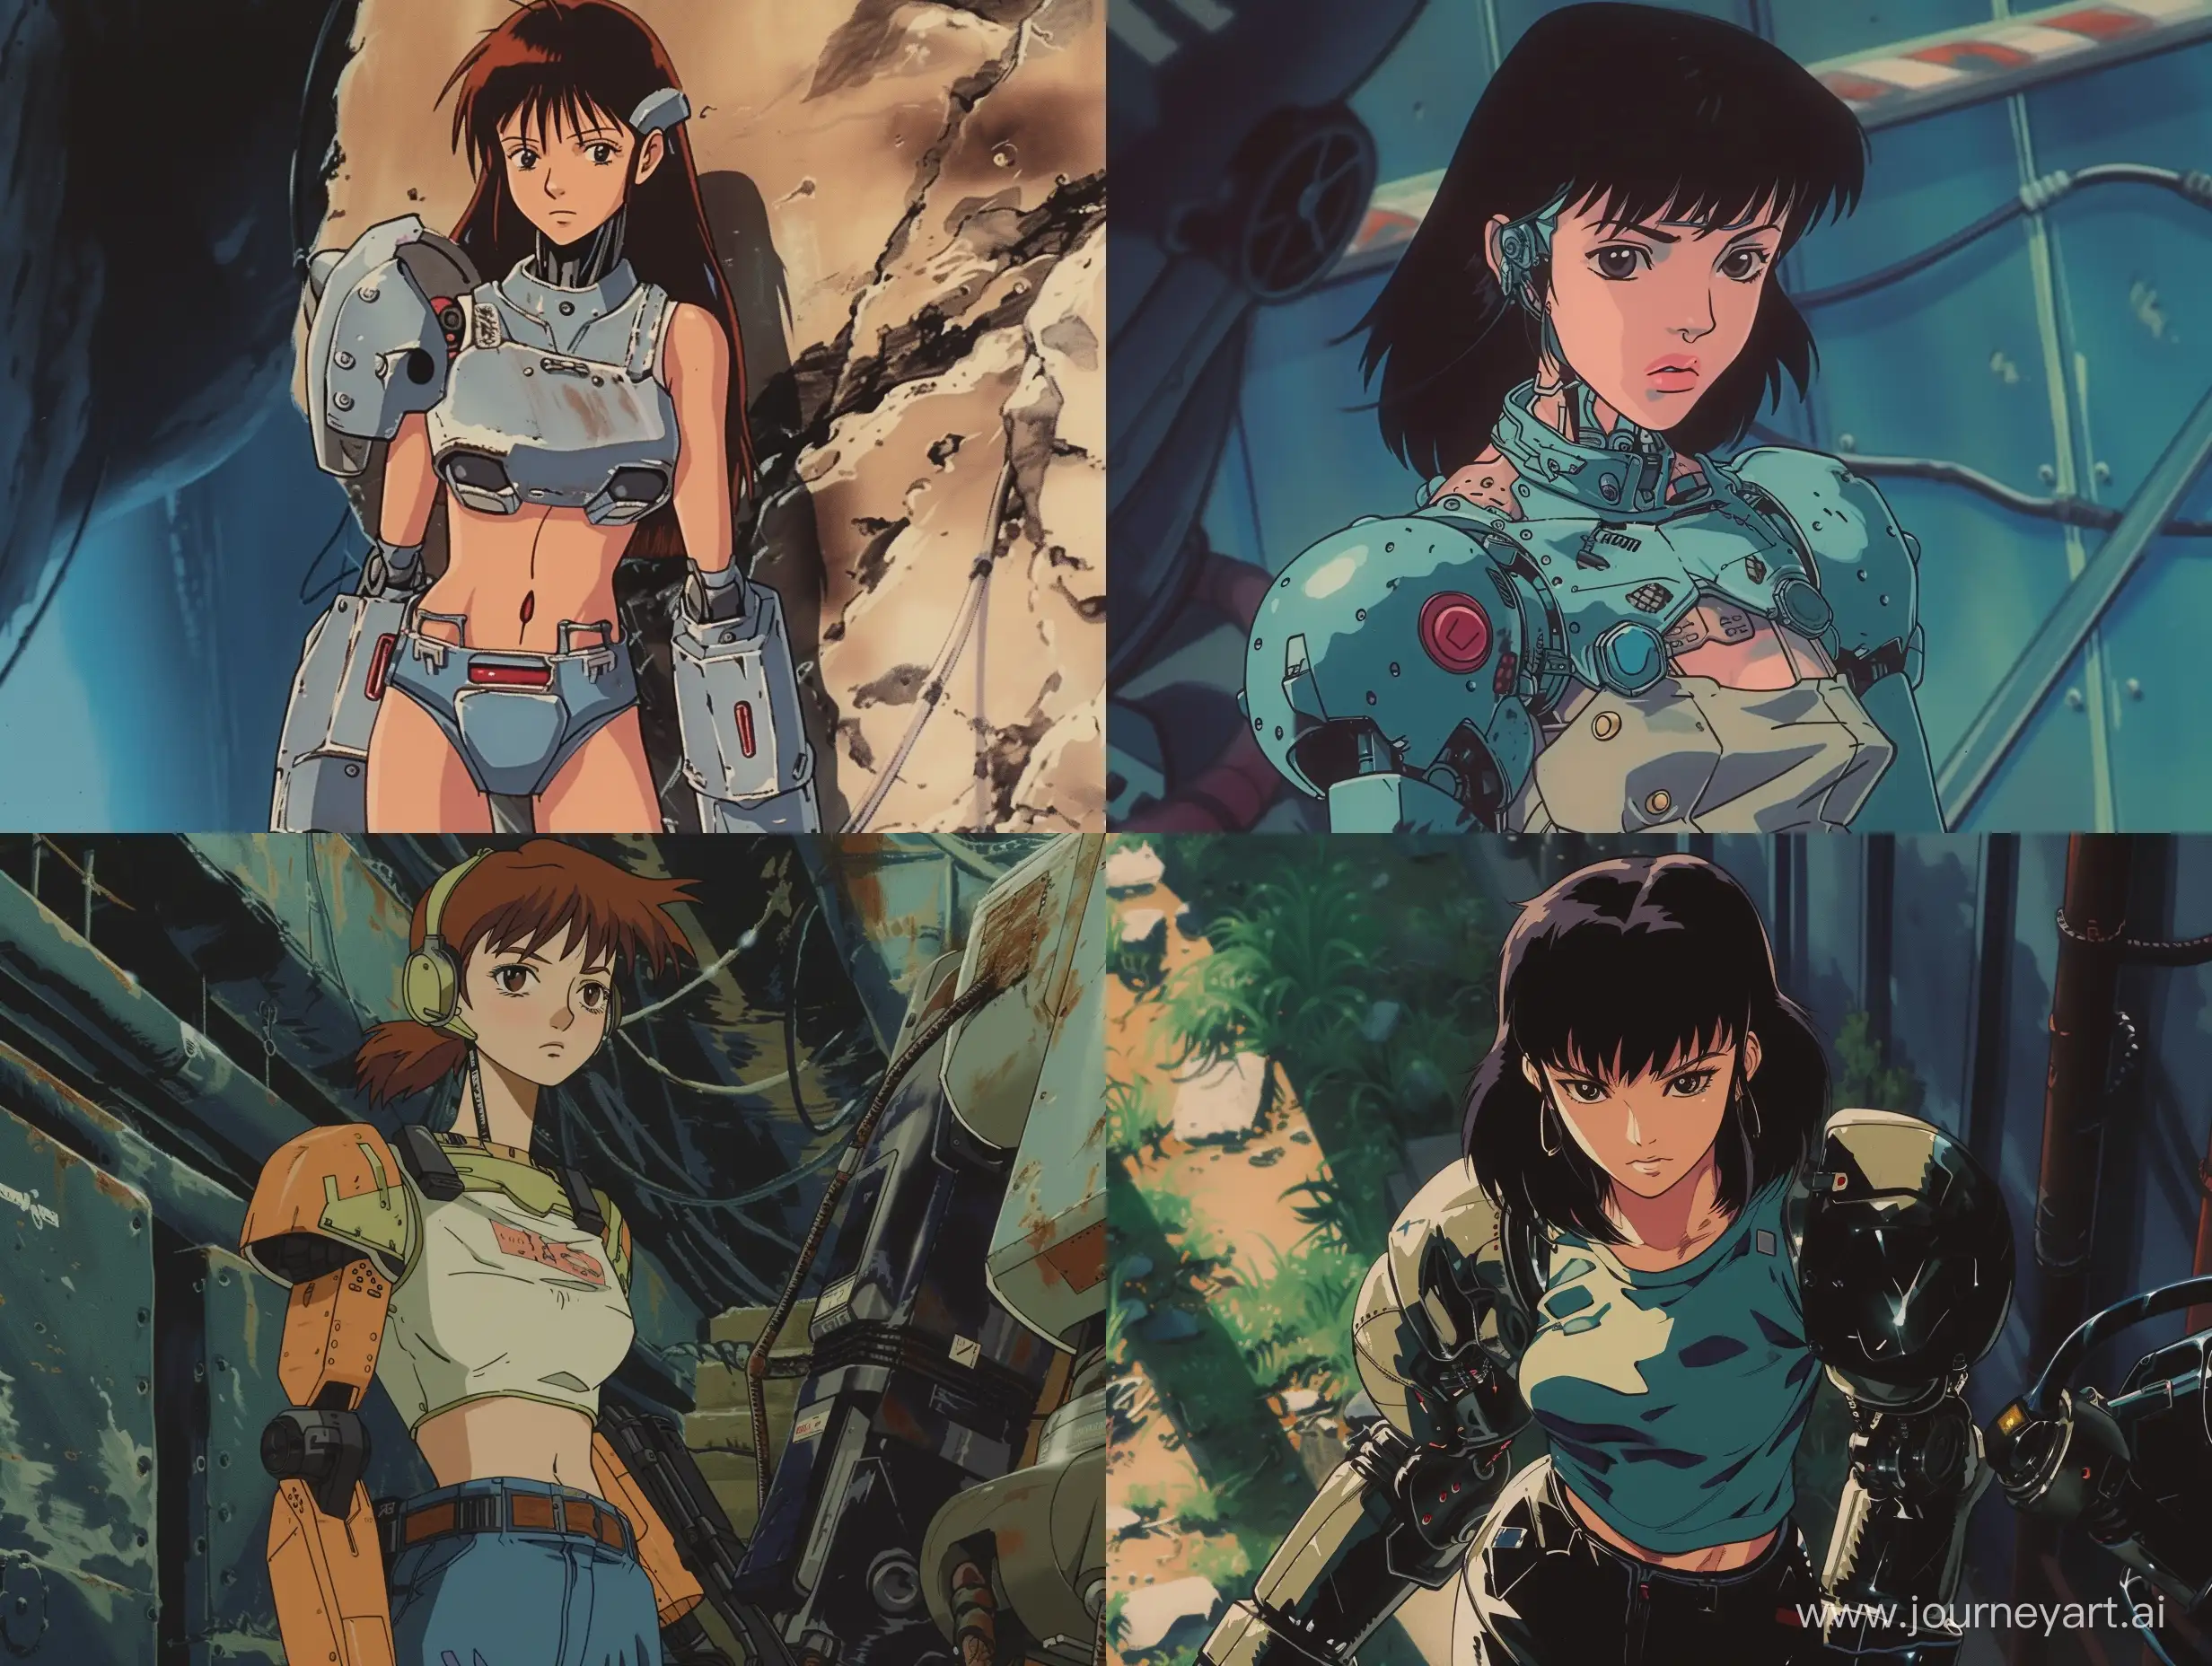 Nostalgic-90s-Anime-Cyborg-Woman-Detailed-Cyberpunk-Dystopia-in-4K